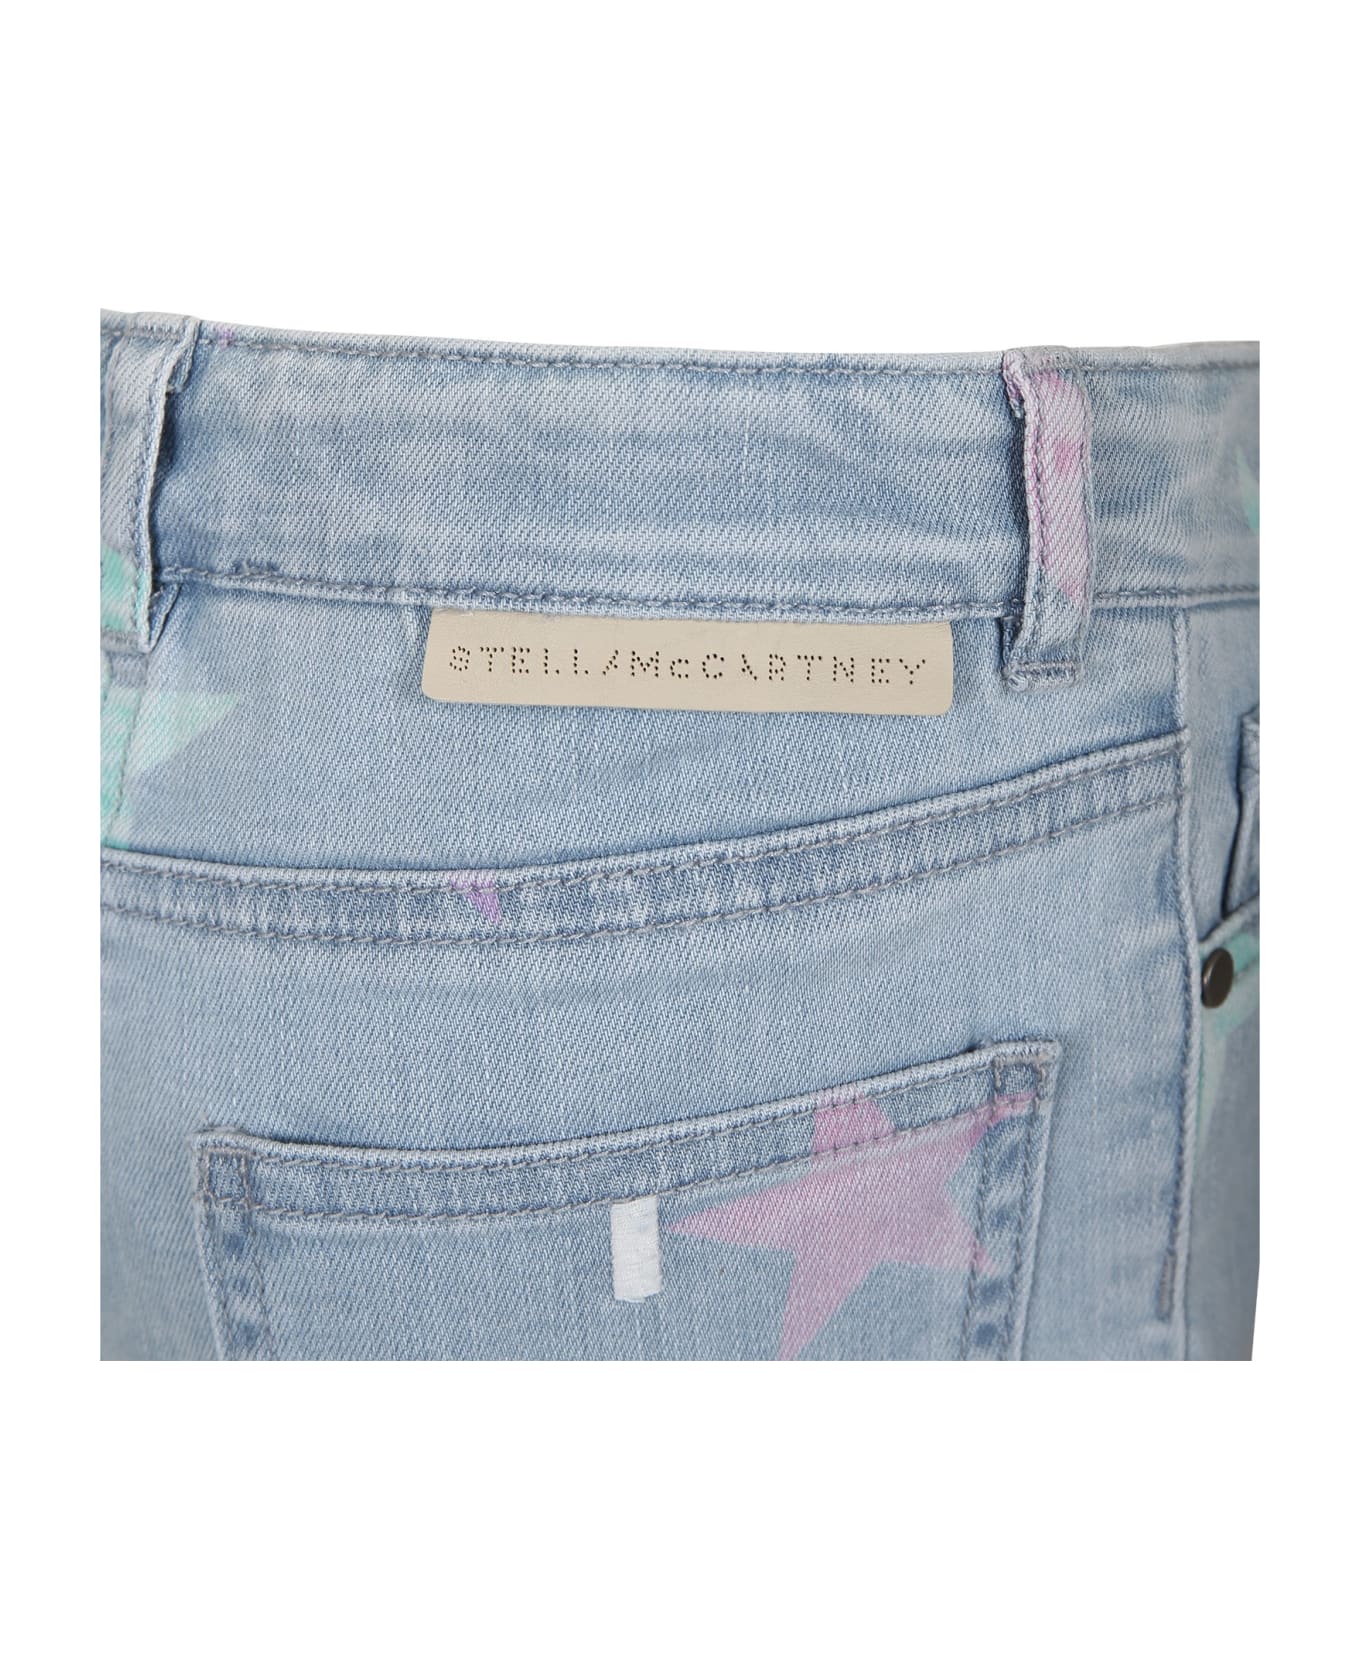 Stella McCartney Kids Denim Shorts For Girl With All-over Stars - BLUE